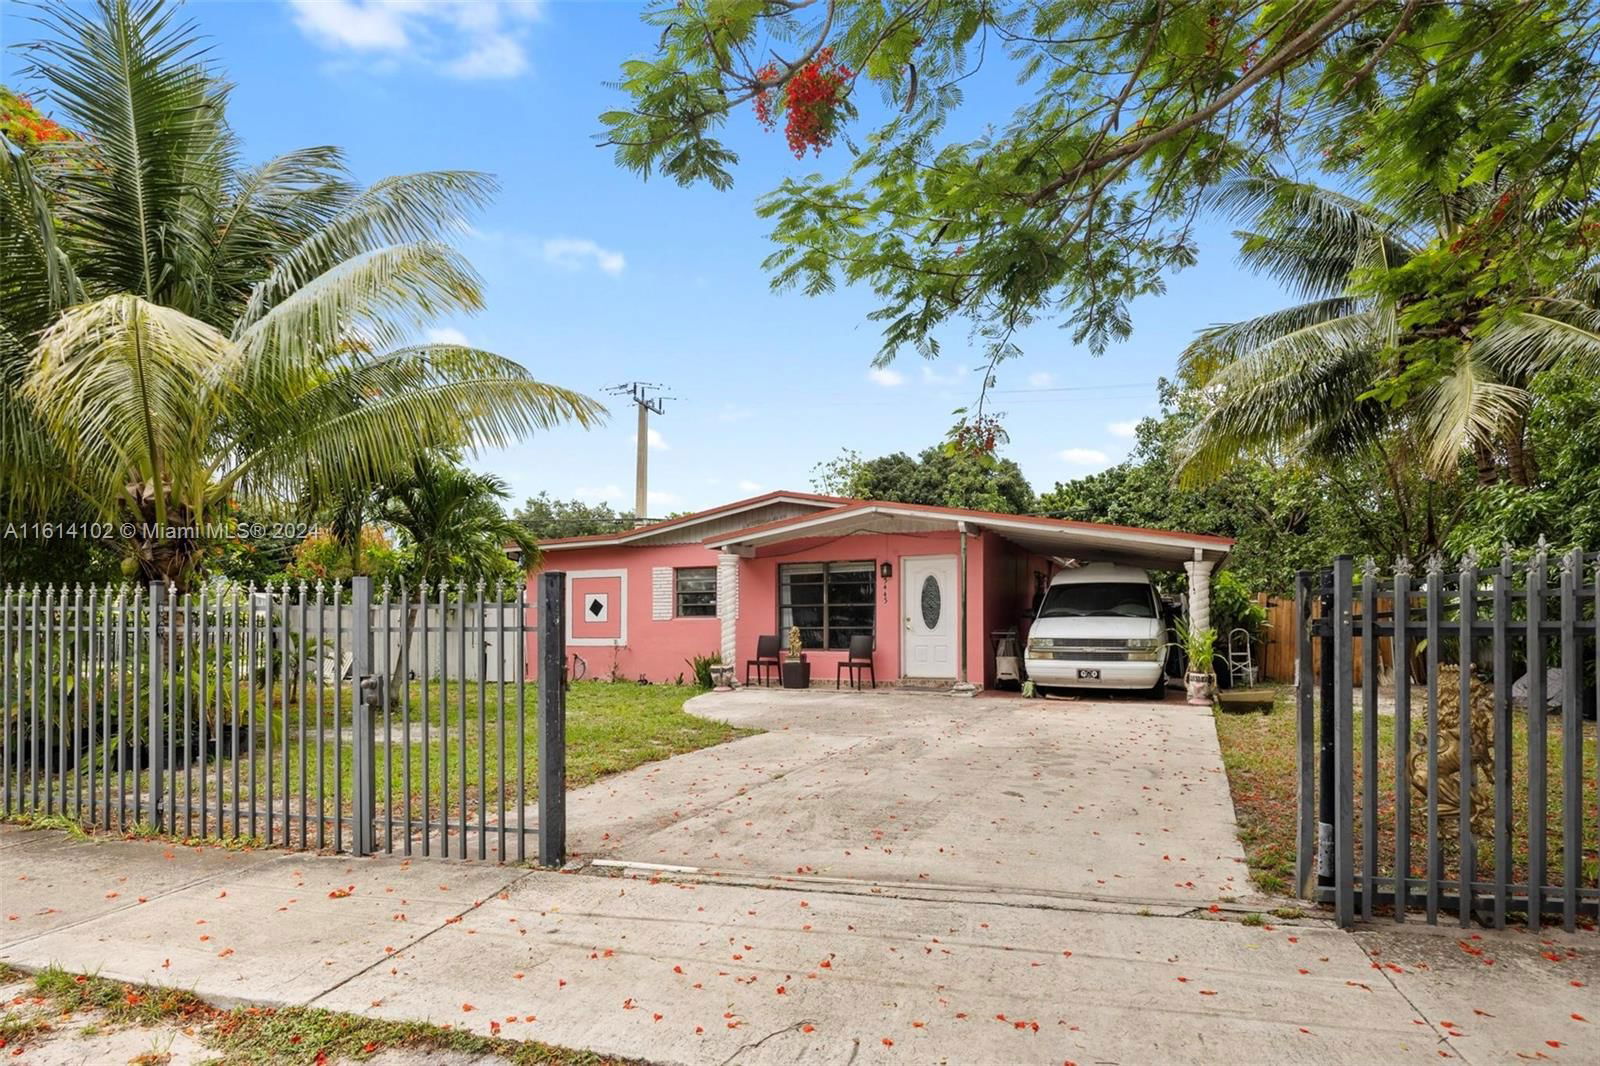 Real estate property located at 5445 173rd Dr, Miami-Dade County, CAROL CITY LAKE STEVEN ES, Miami Gardens, FL